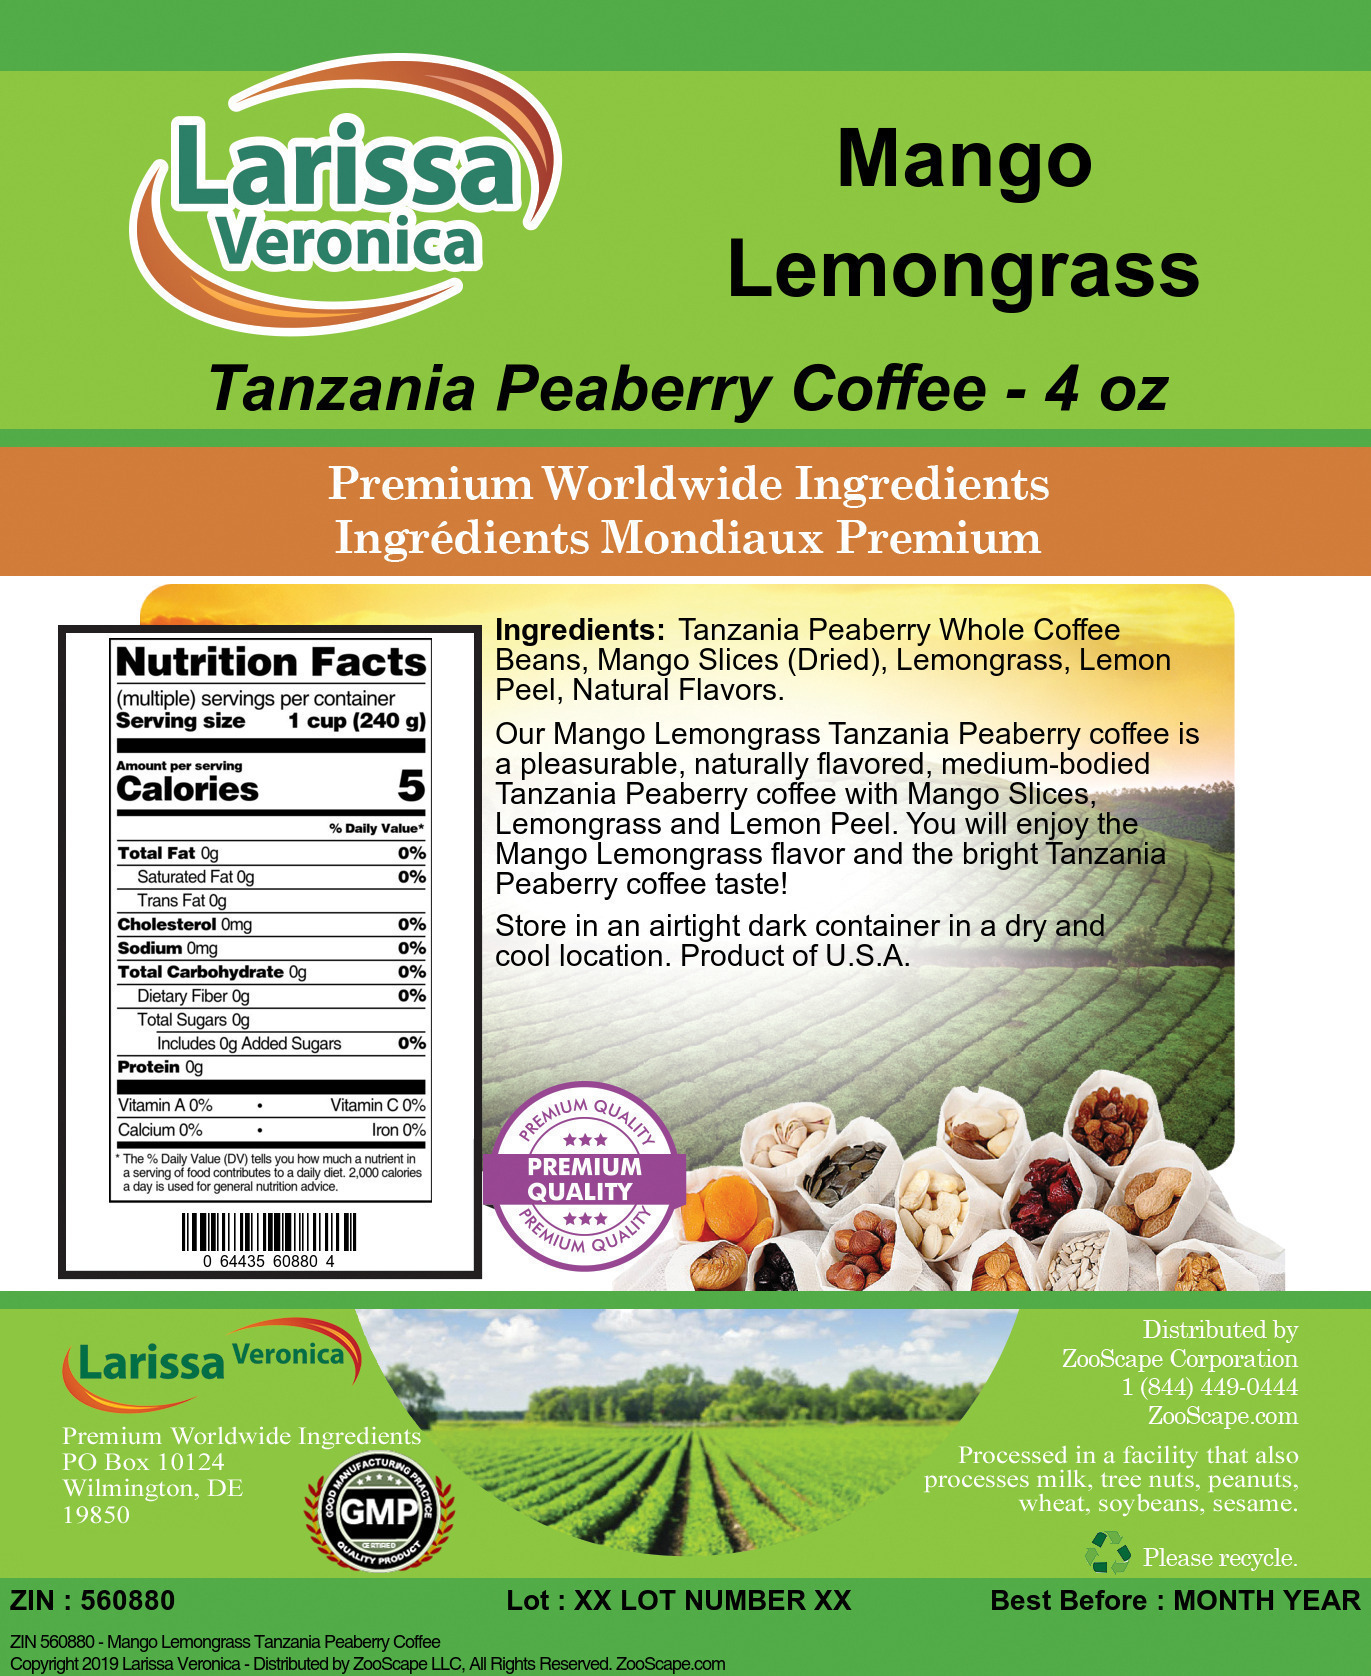 Mango Lemongrass Tanzania Peaberry Coffee - Label